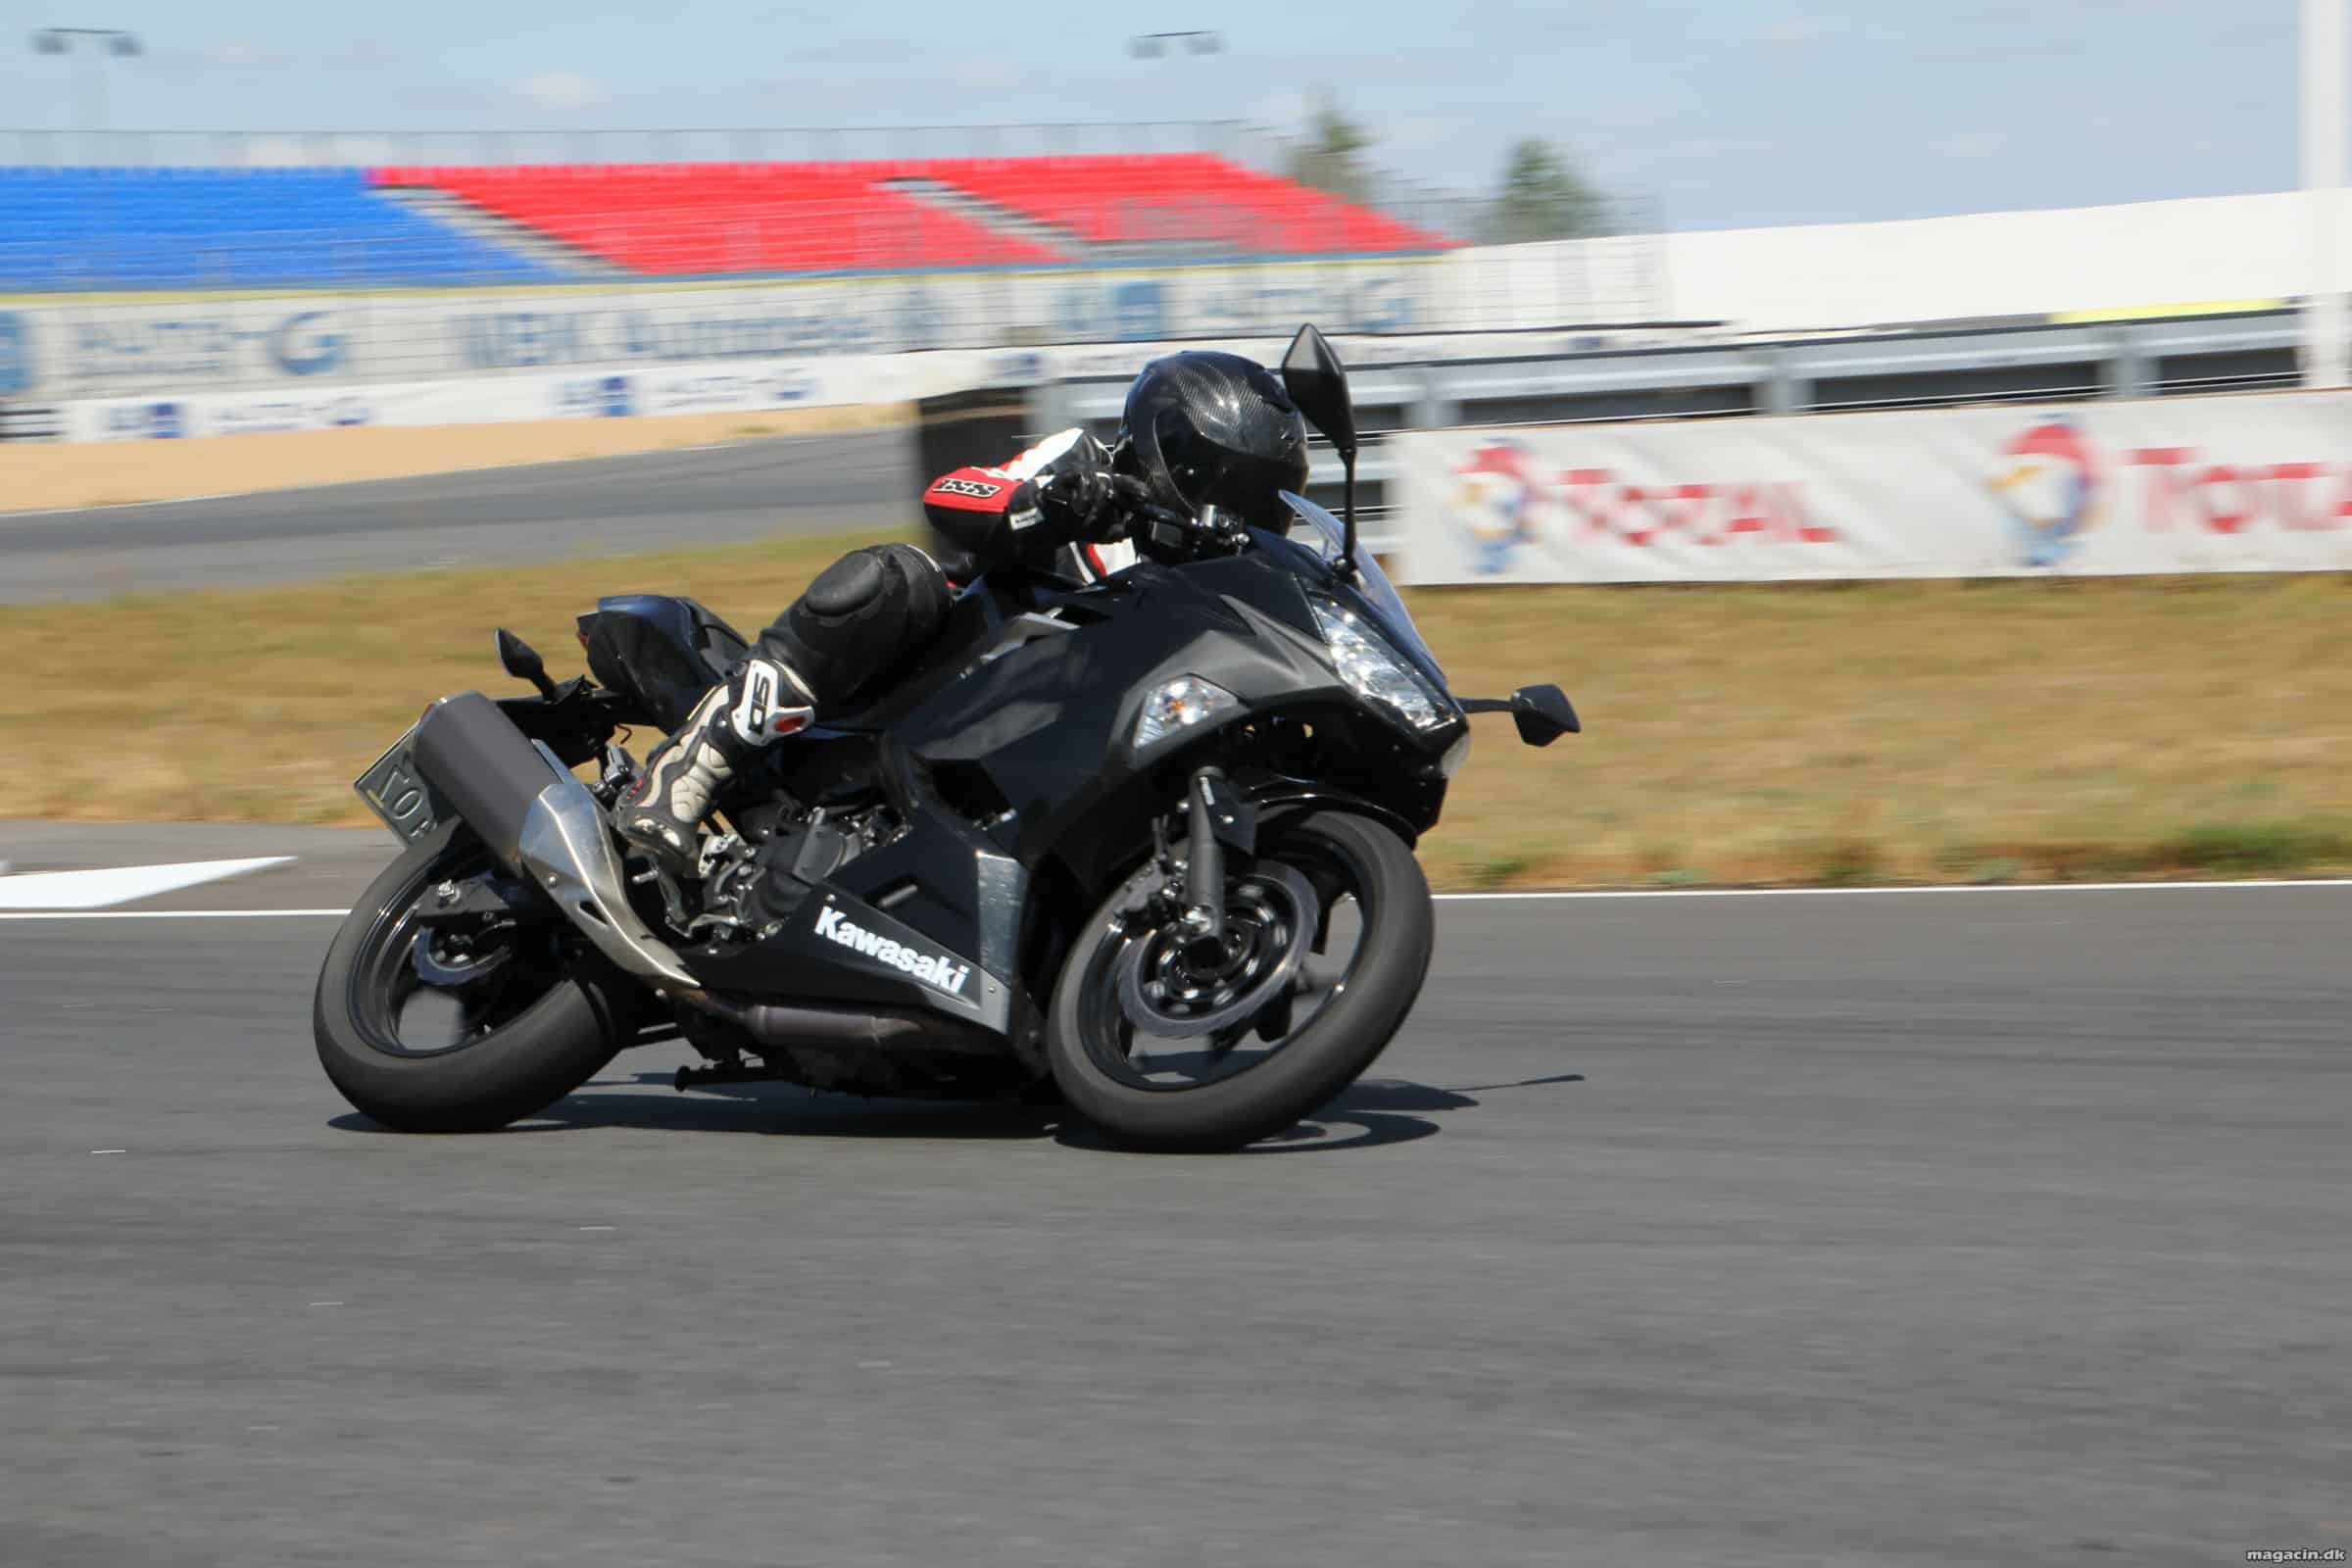 Test: 2018 Kawasaki Ninja 400 vokser med opgaven